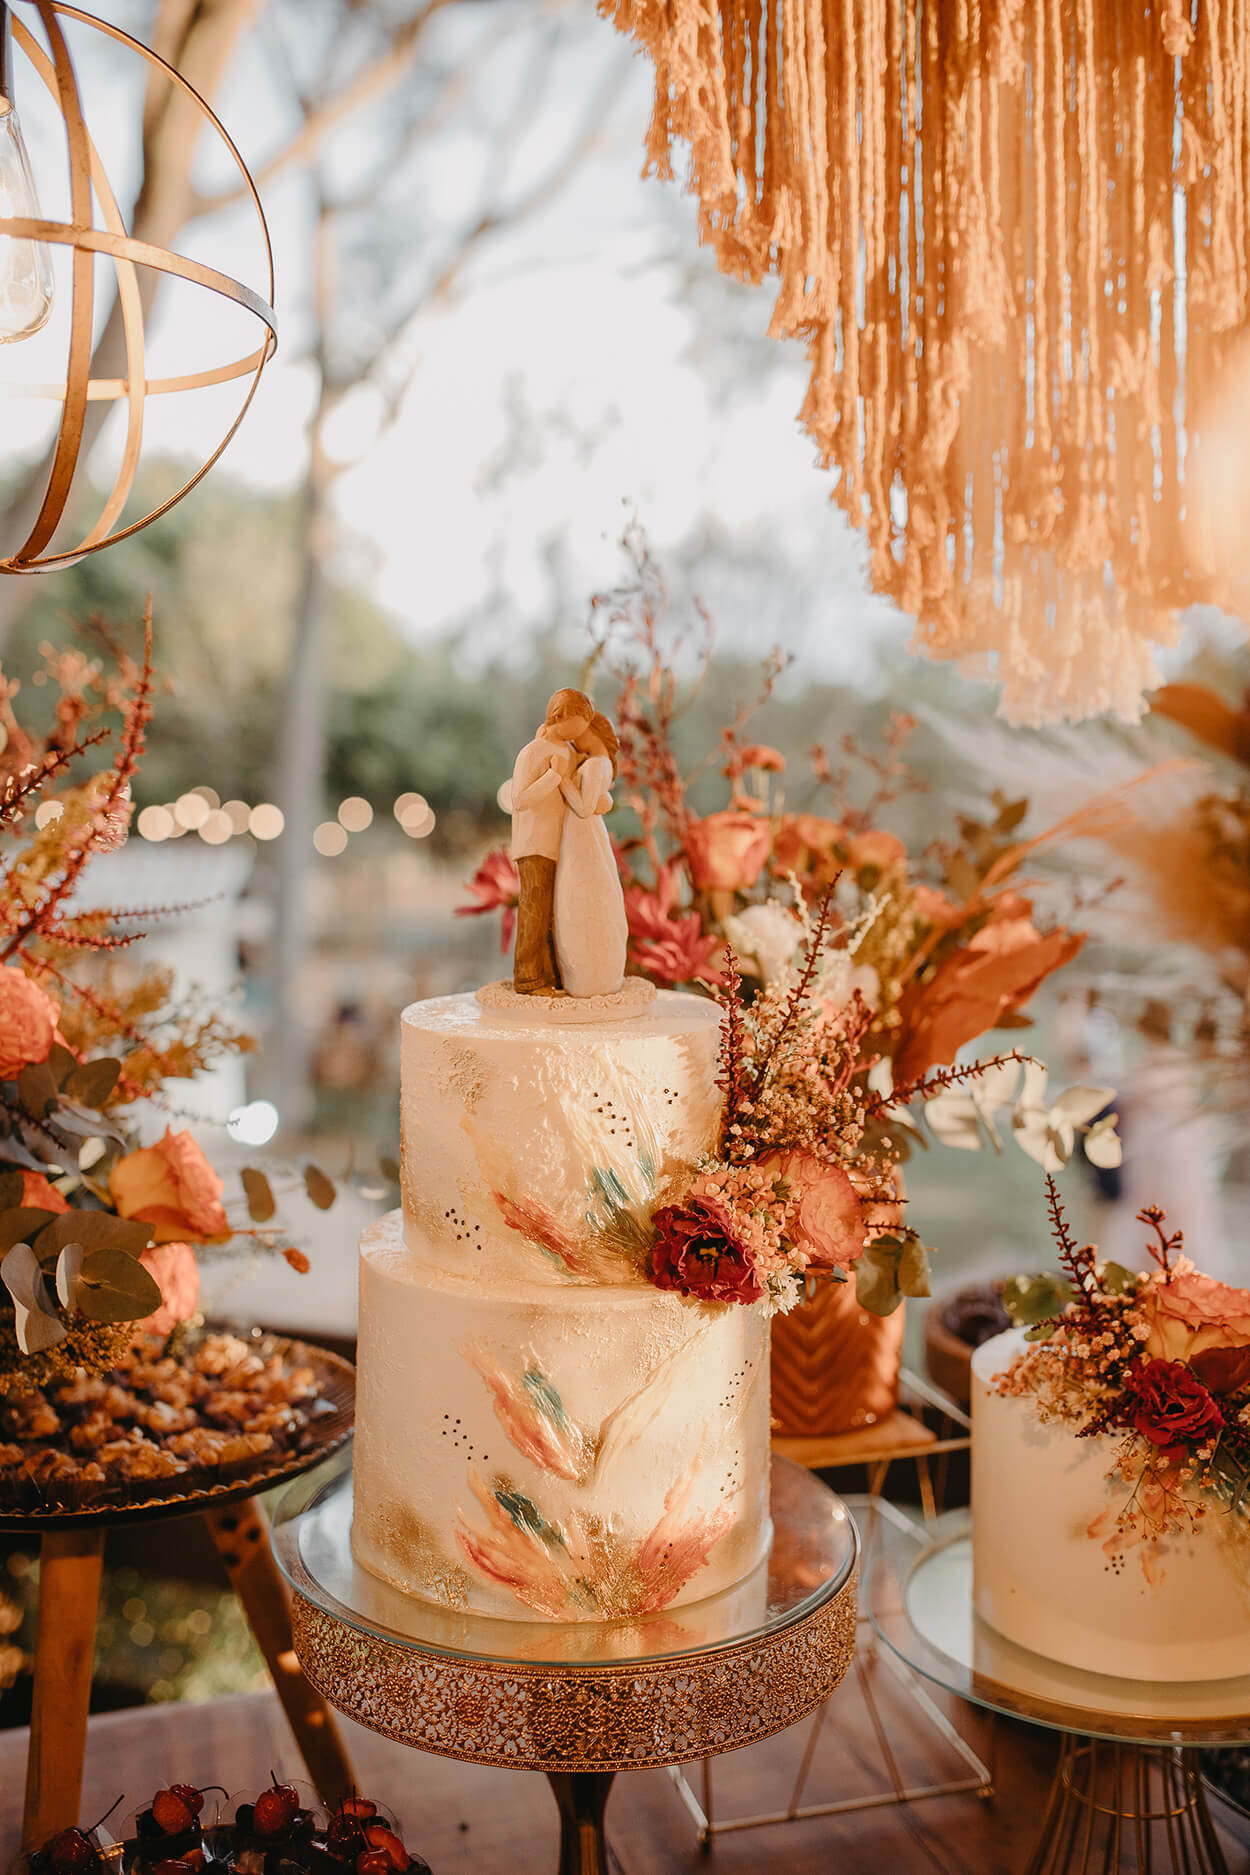 bolo de casamento branco com pinceladas coloridas e bonecos no topo do bolo